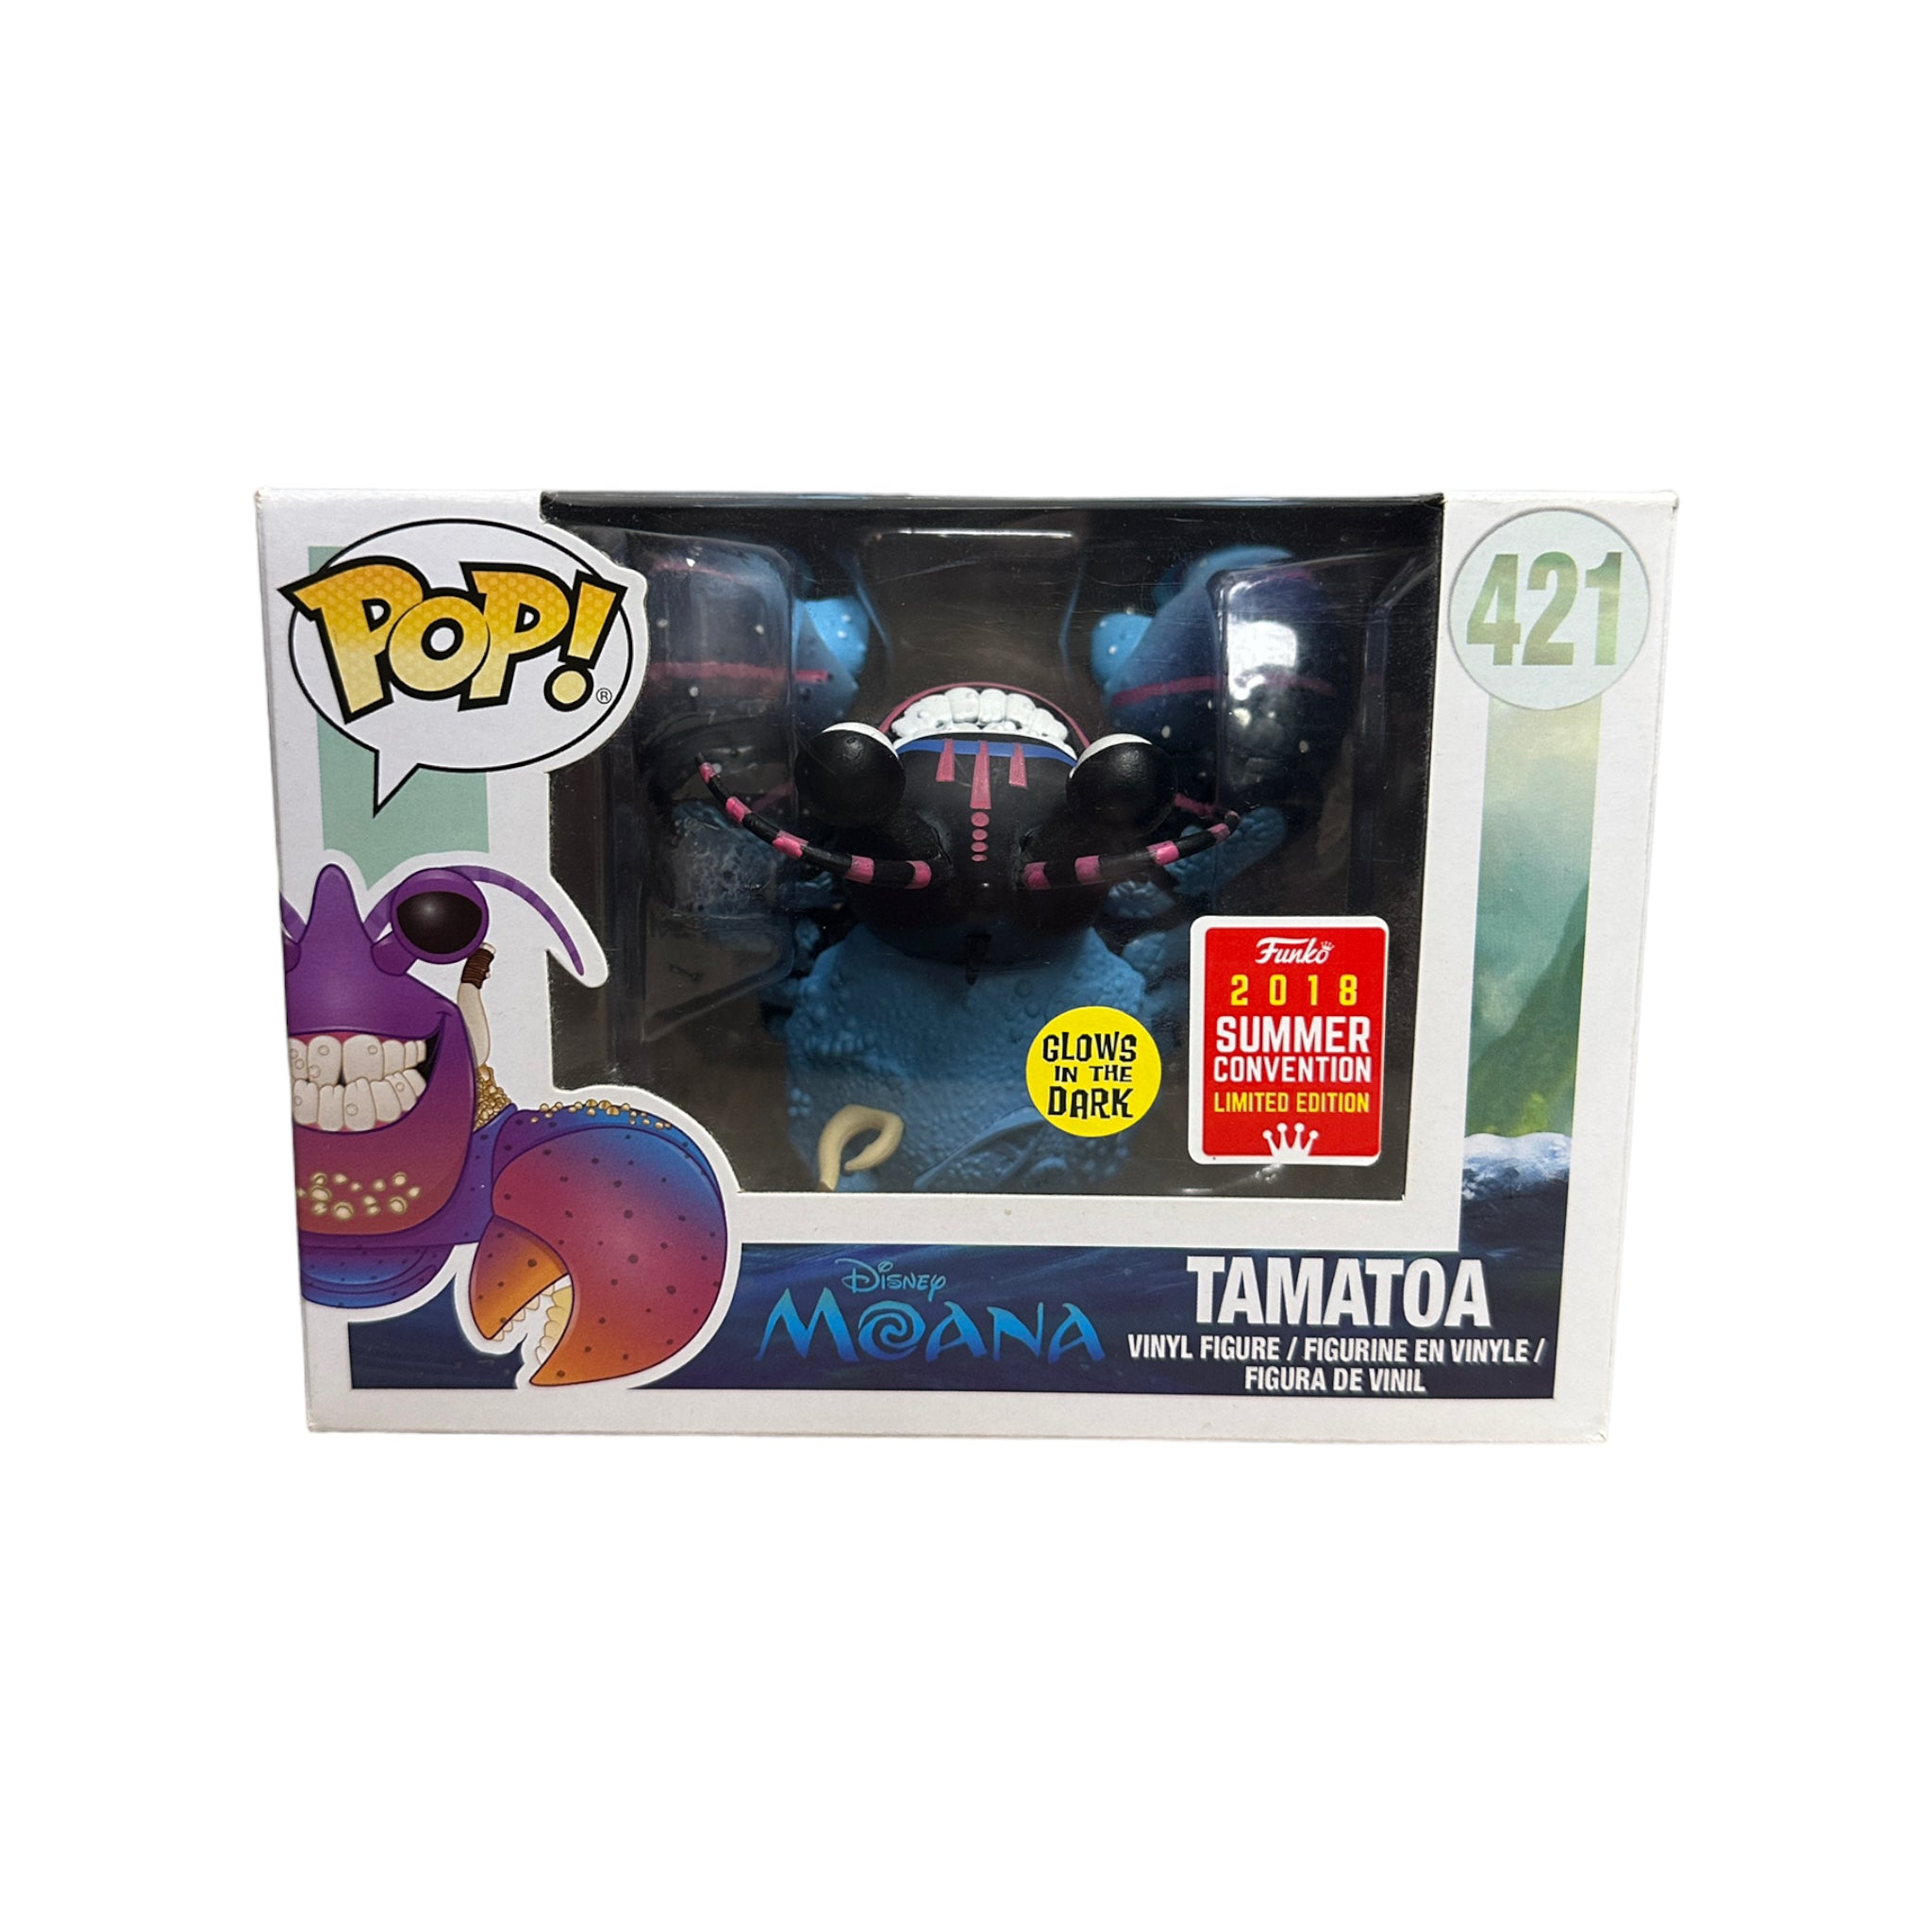 Tamatoa #421 (Neon Glows in the Dark) Funko Pop! - Moana - SDCC 2018 Shared Exclusive - Condition 8.5/10